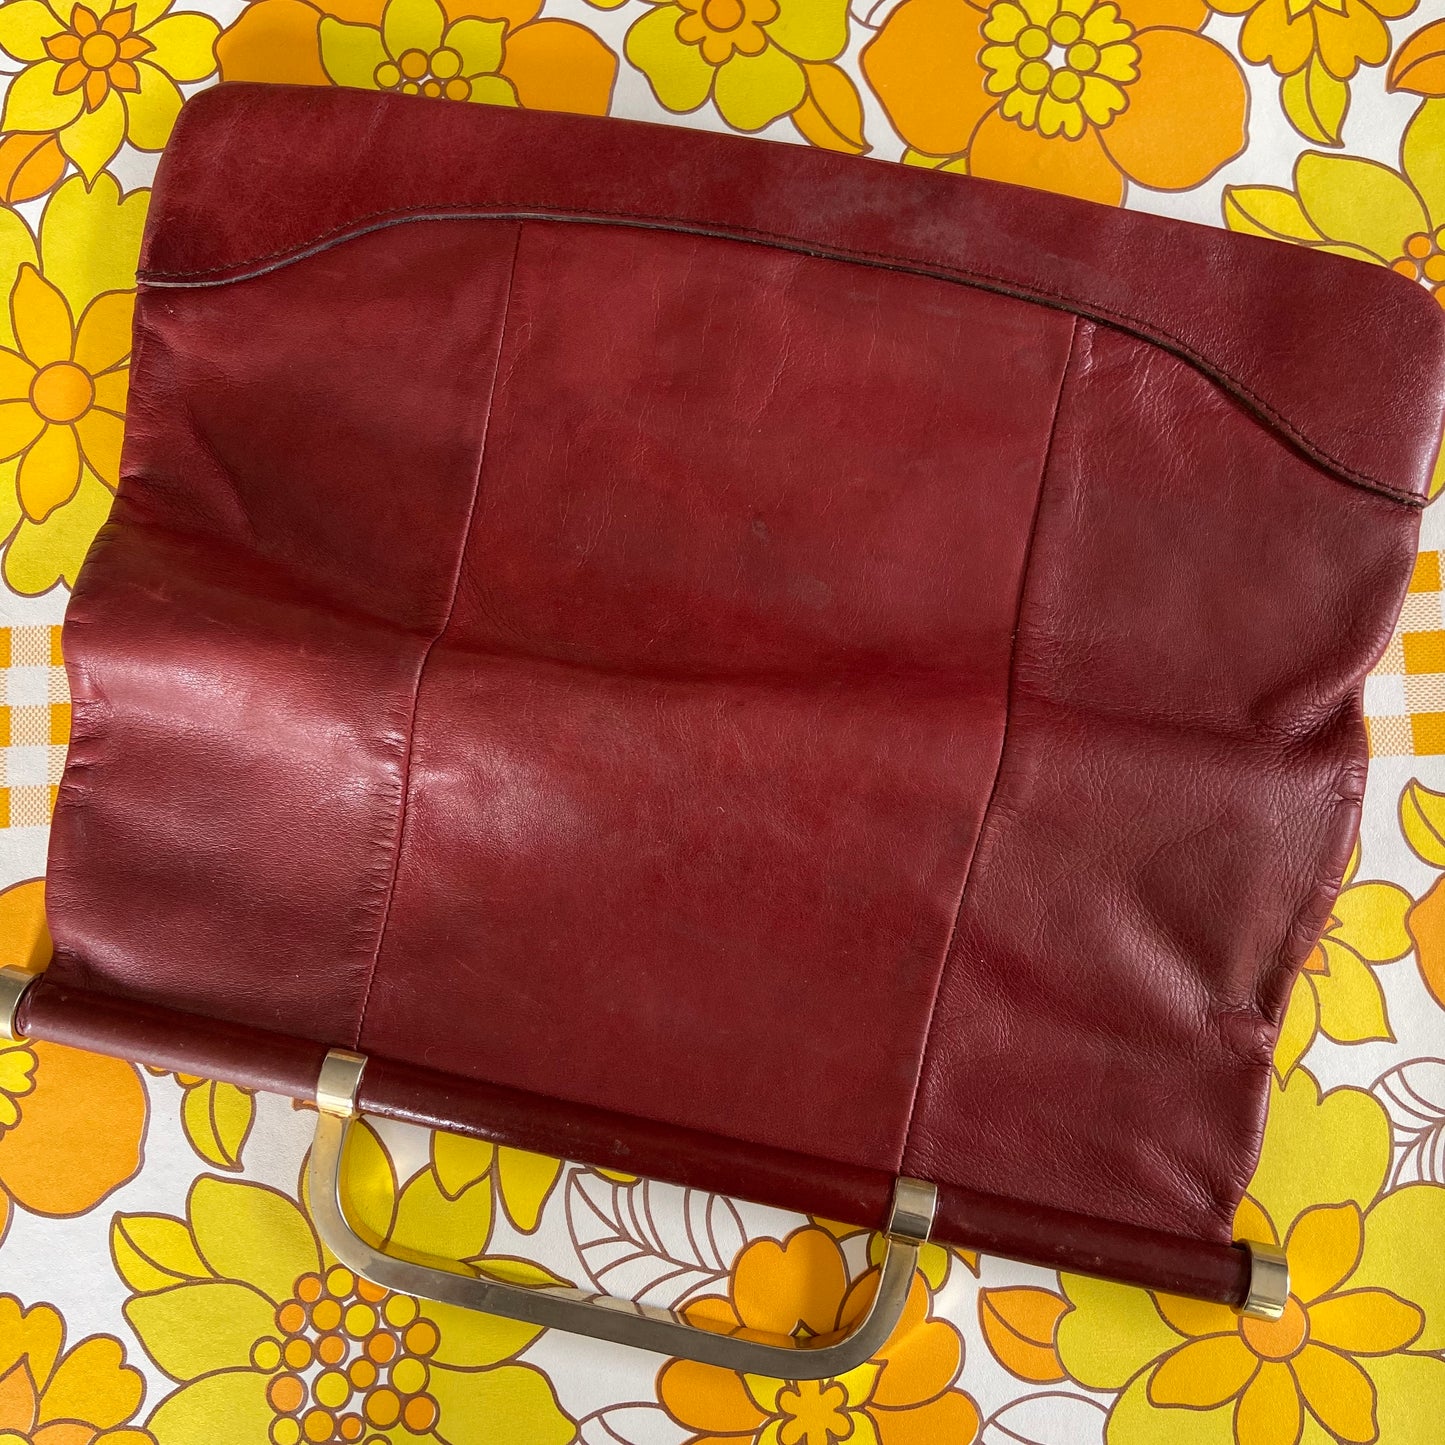 COOL Vintage Genuine LEATHER Clutch 70's Old School Bag